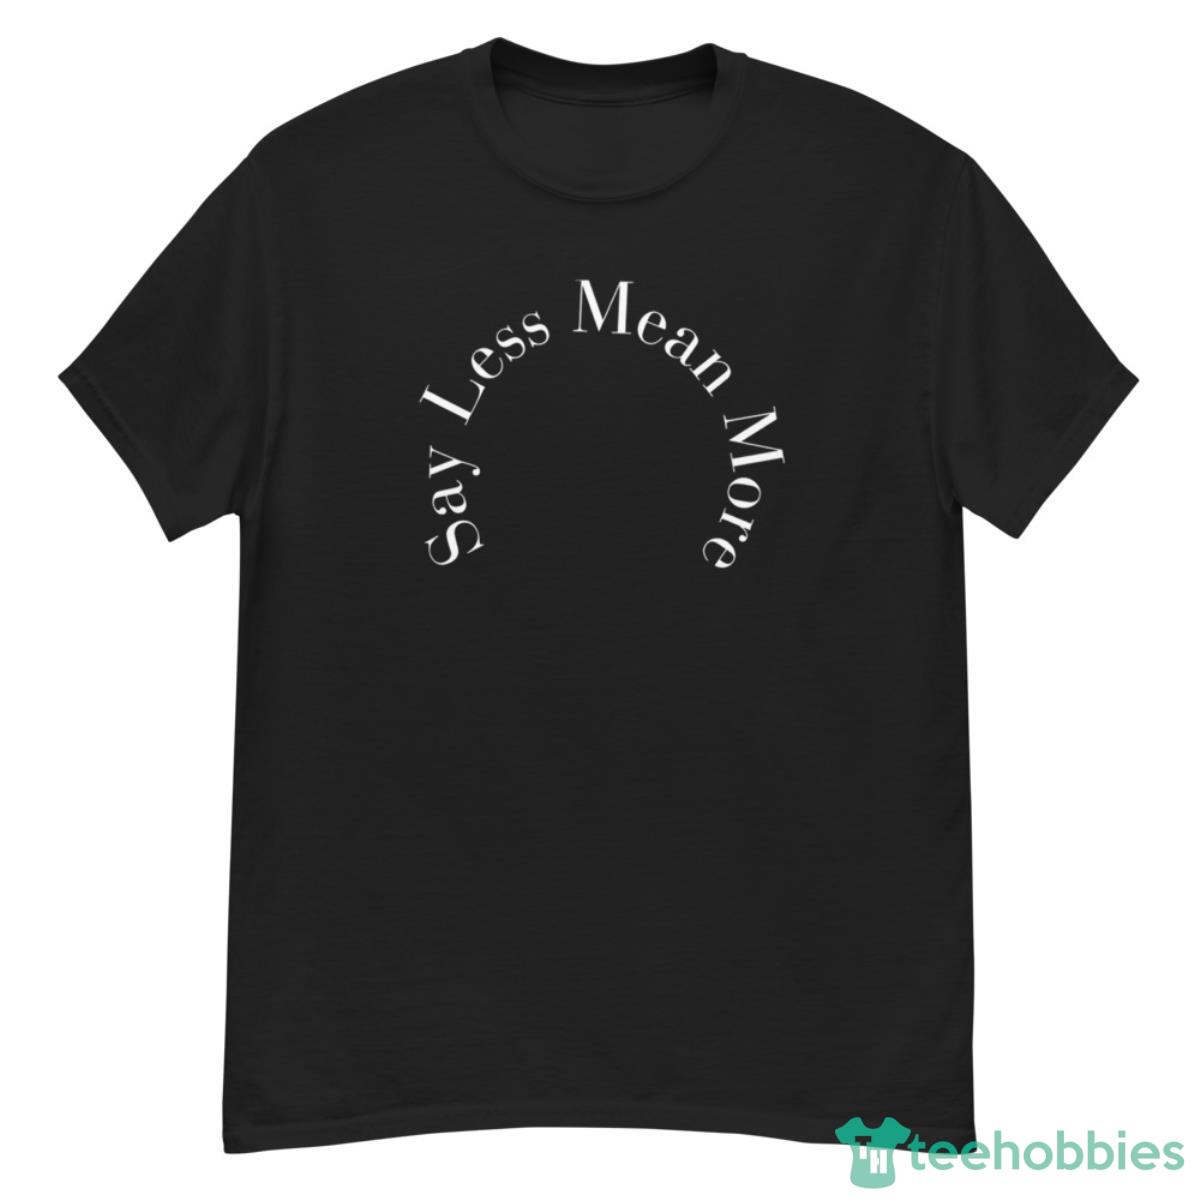 Say Less Mean More Shirt - G500 Men’s Classic T-Shirt